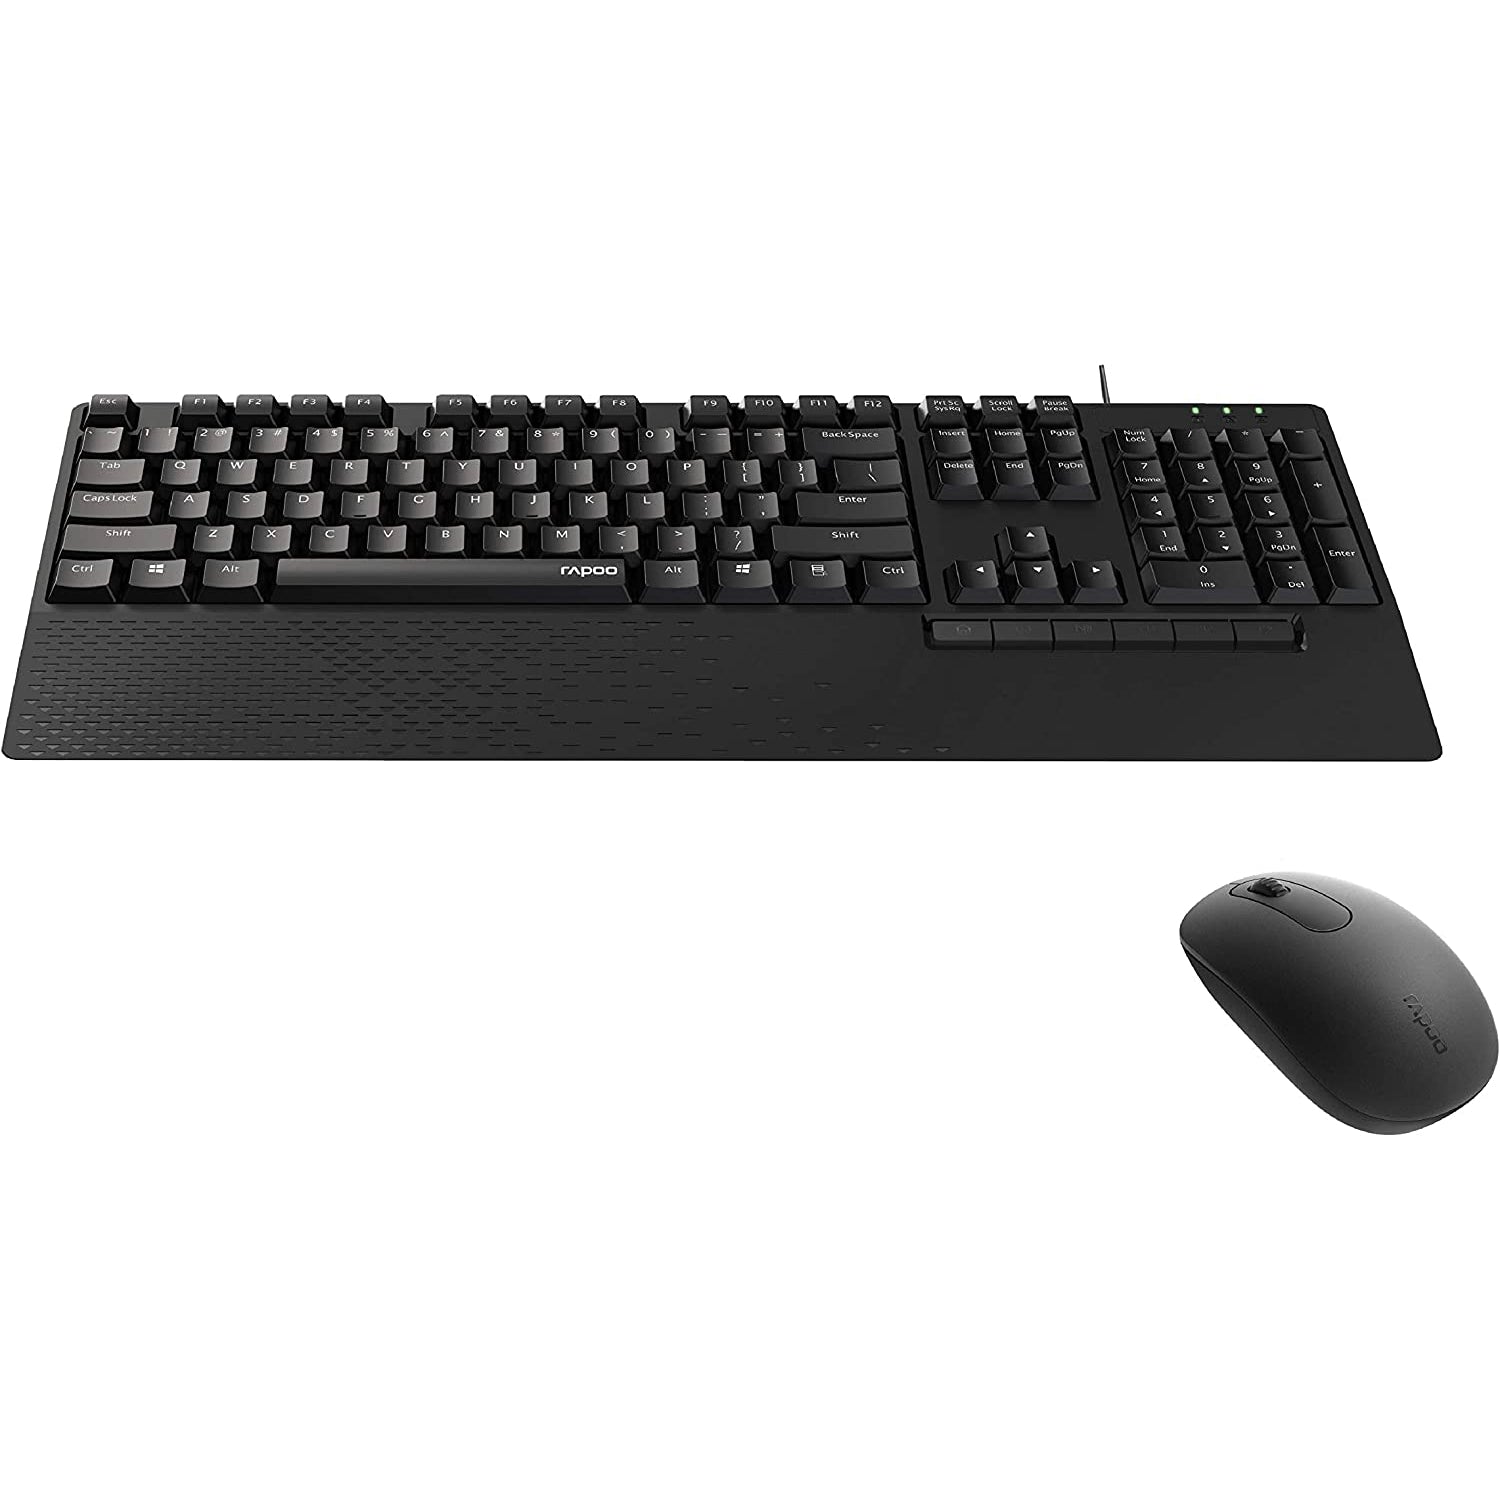 Rapoo NX2000 Wired Keyboard Mouse Desktop Combo Set, Black - Refurbished Pristine